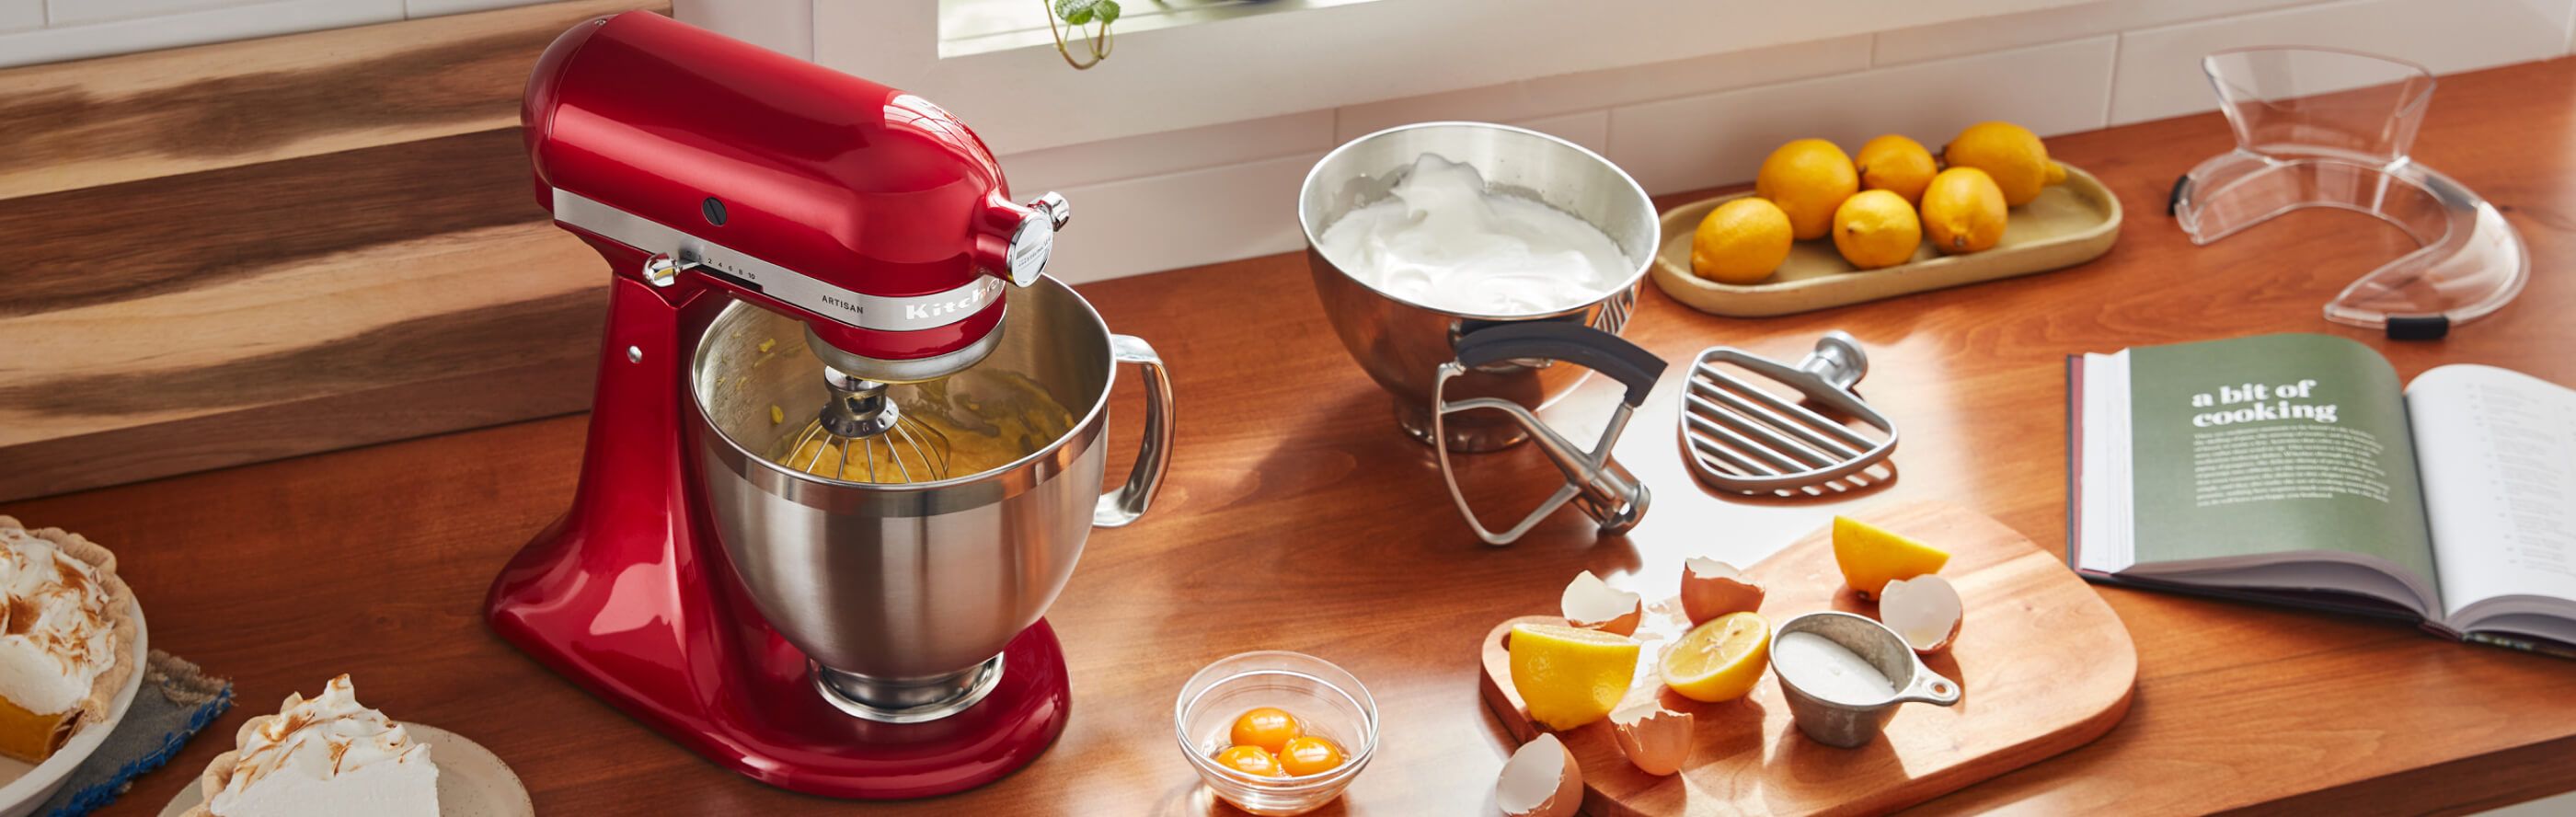 KitchenAid® tilt-head stand mixer with lemon meringue pie ingredients